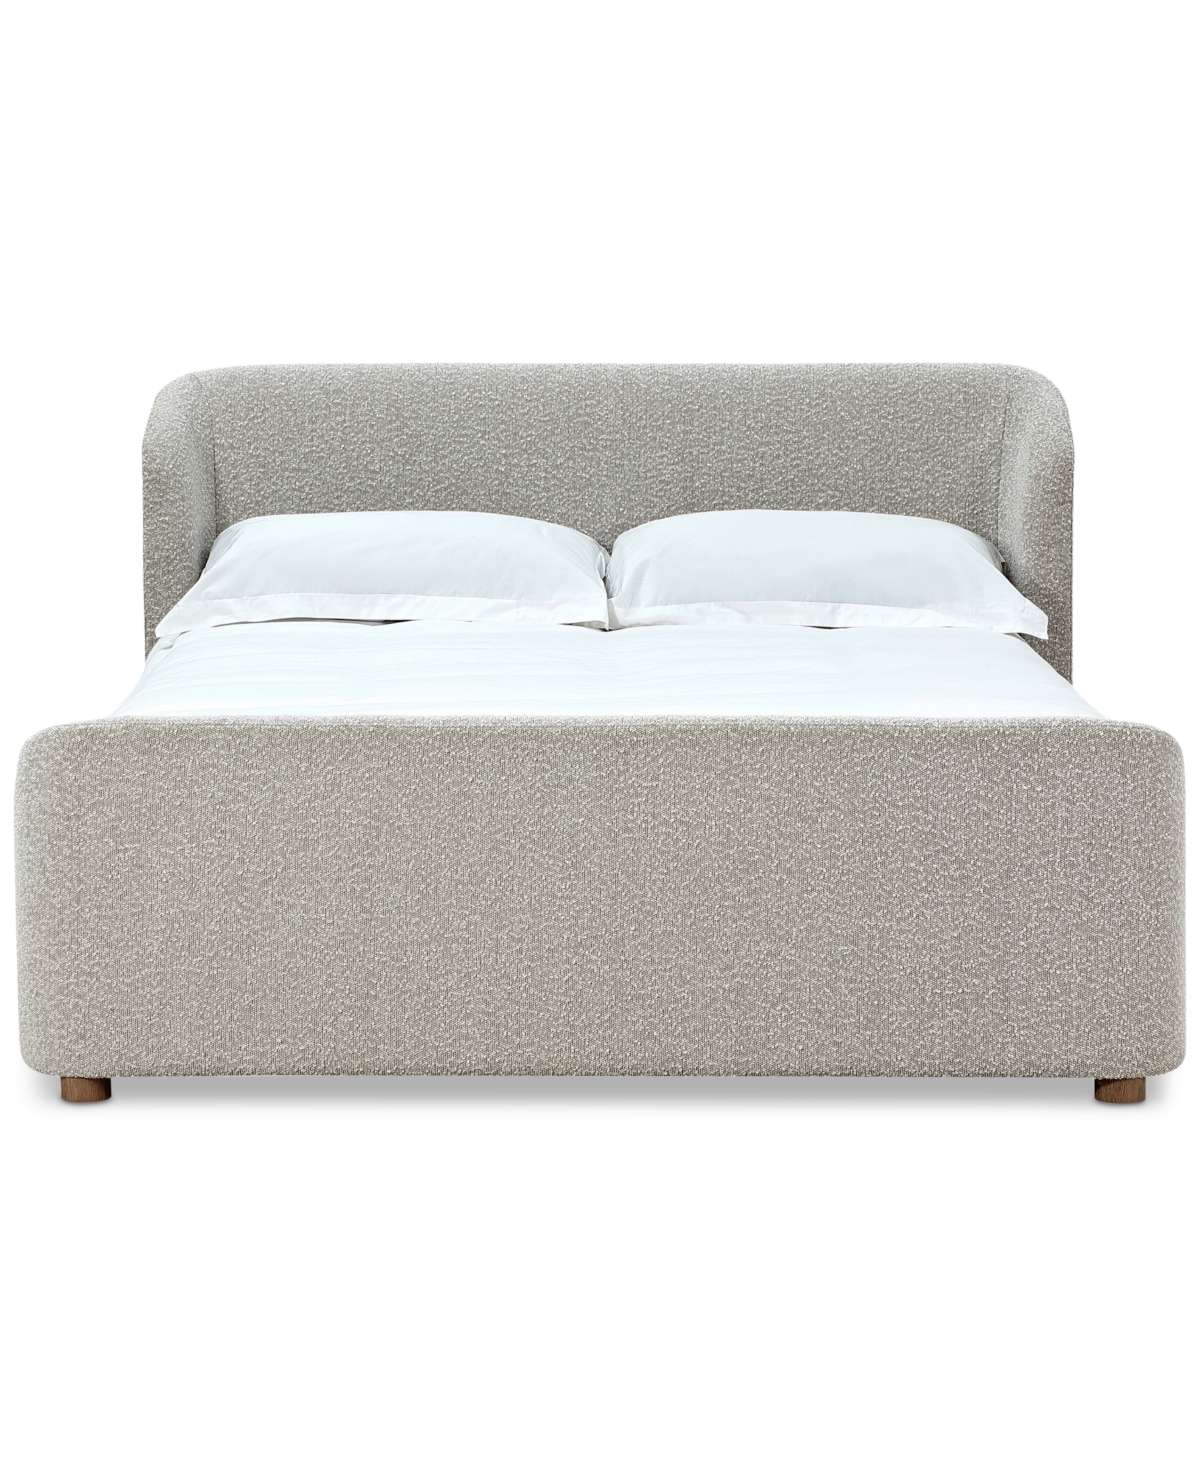 Furniture Laskar Full Bed In Ctnbl Grey